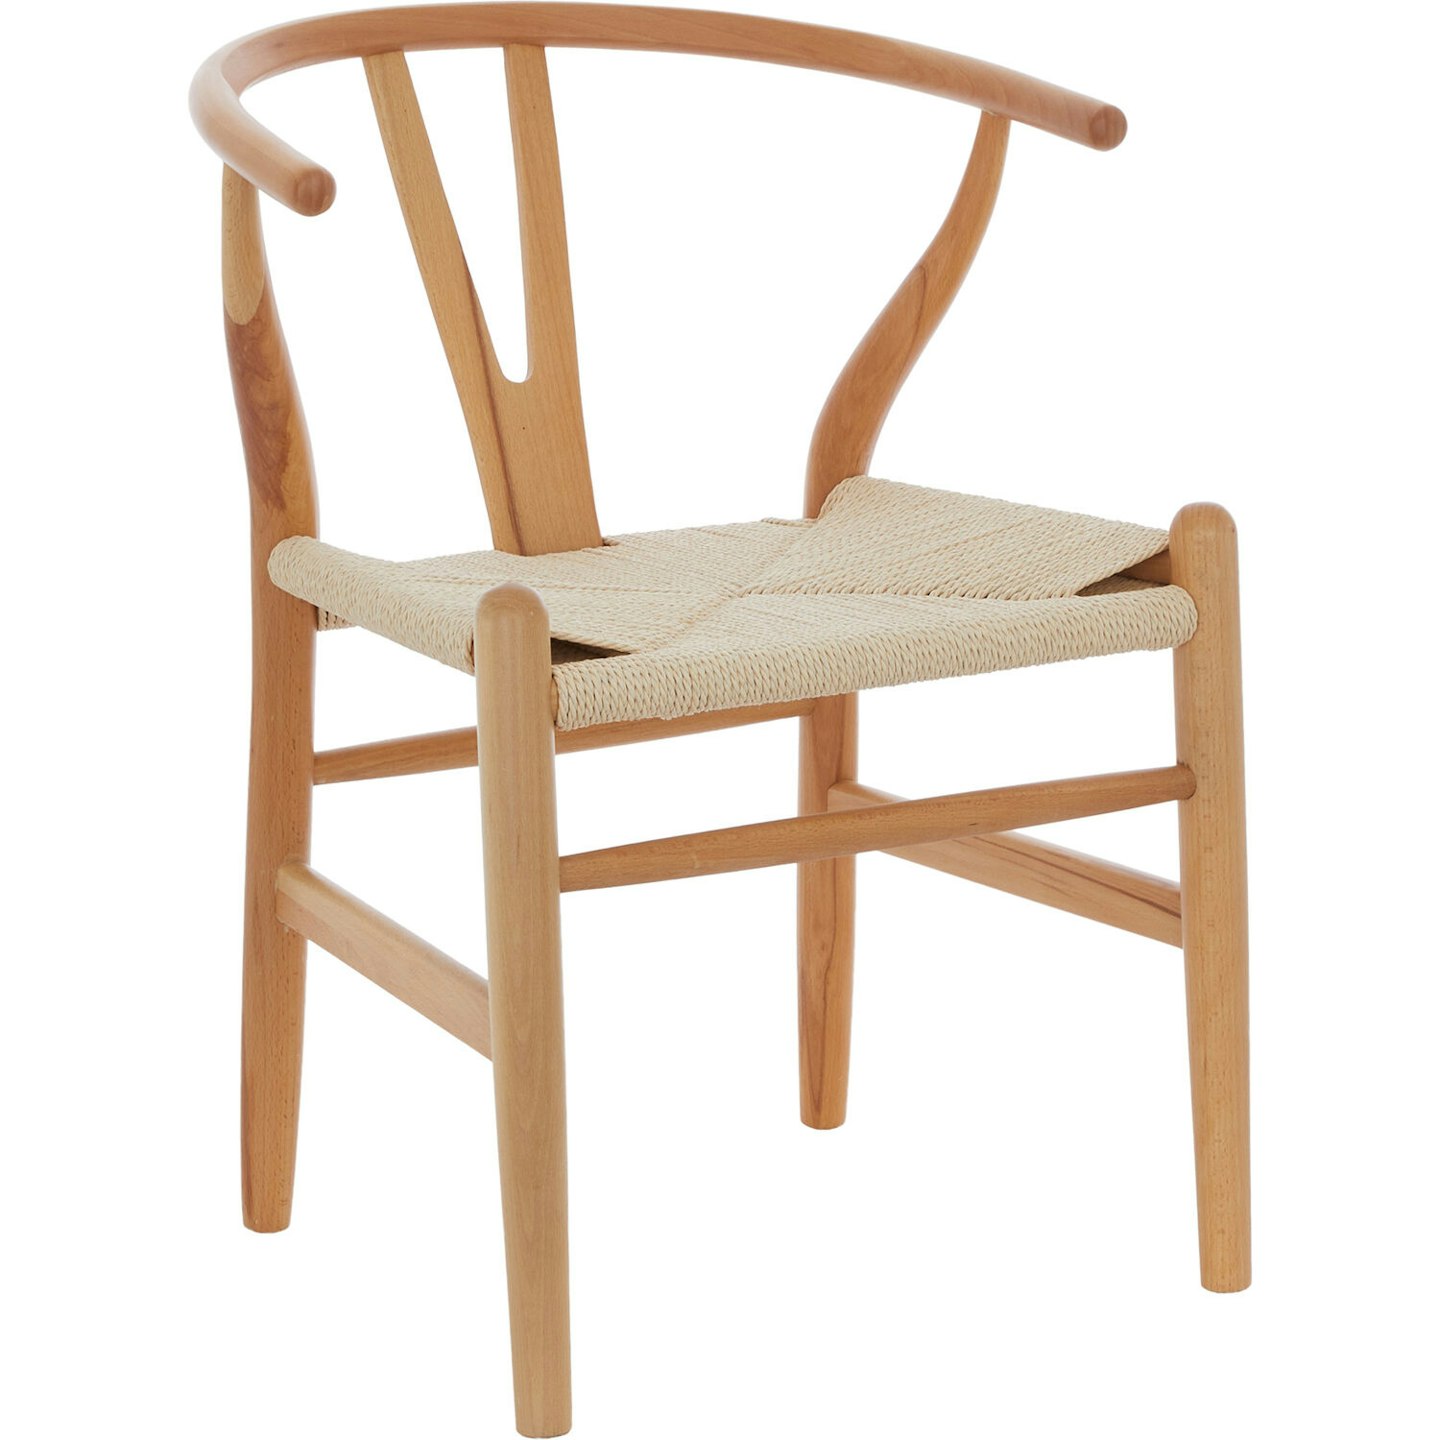 Tk Maxx, Natural Wooden Wishbone Chair 74x55cm, £99.99